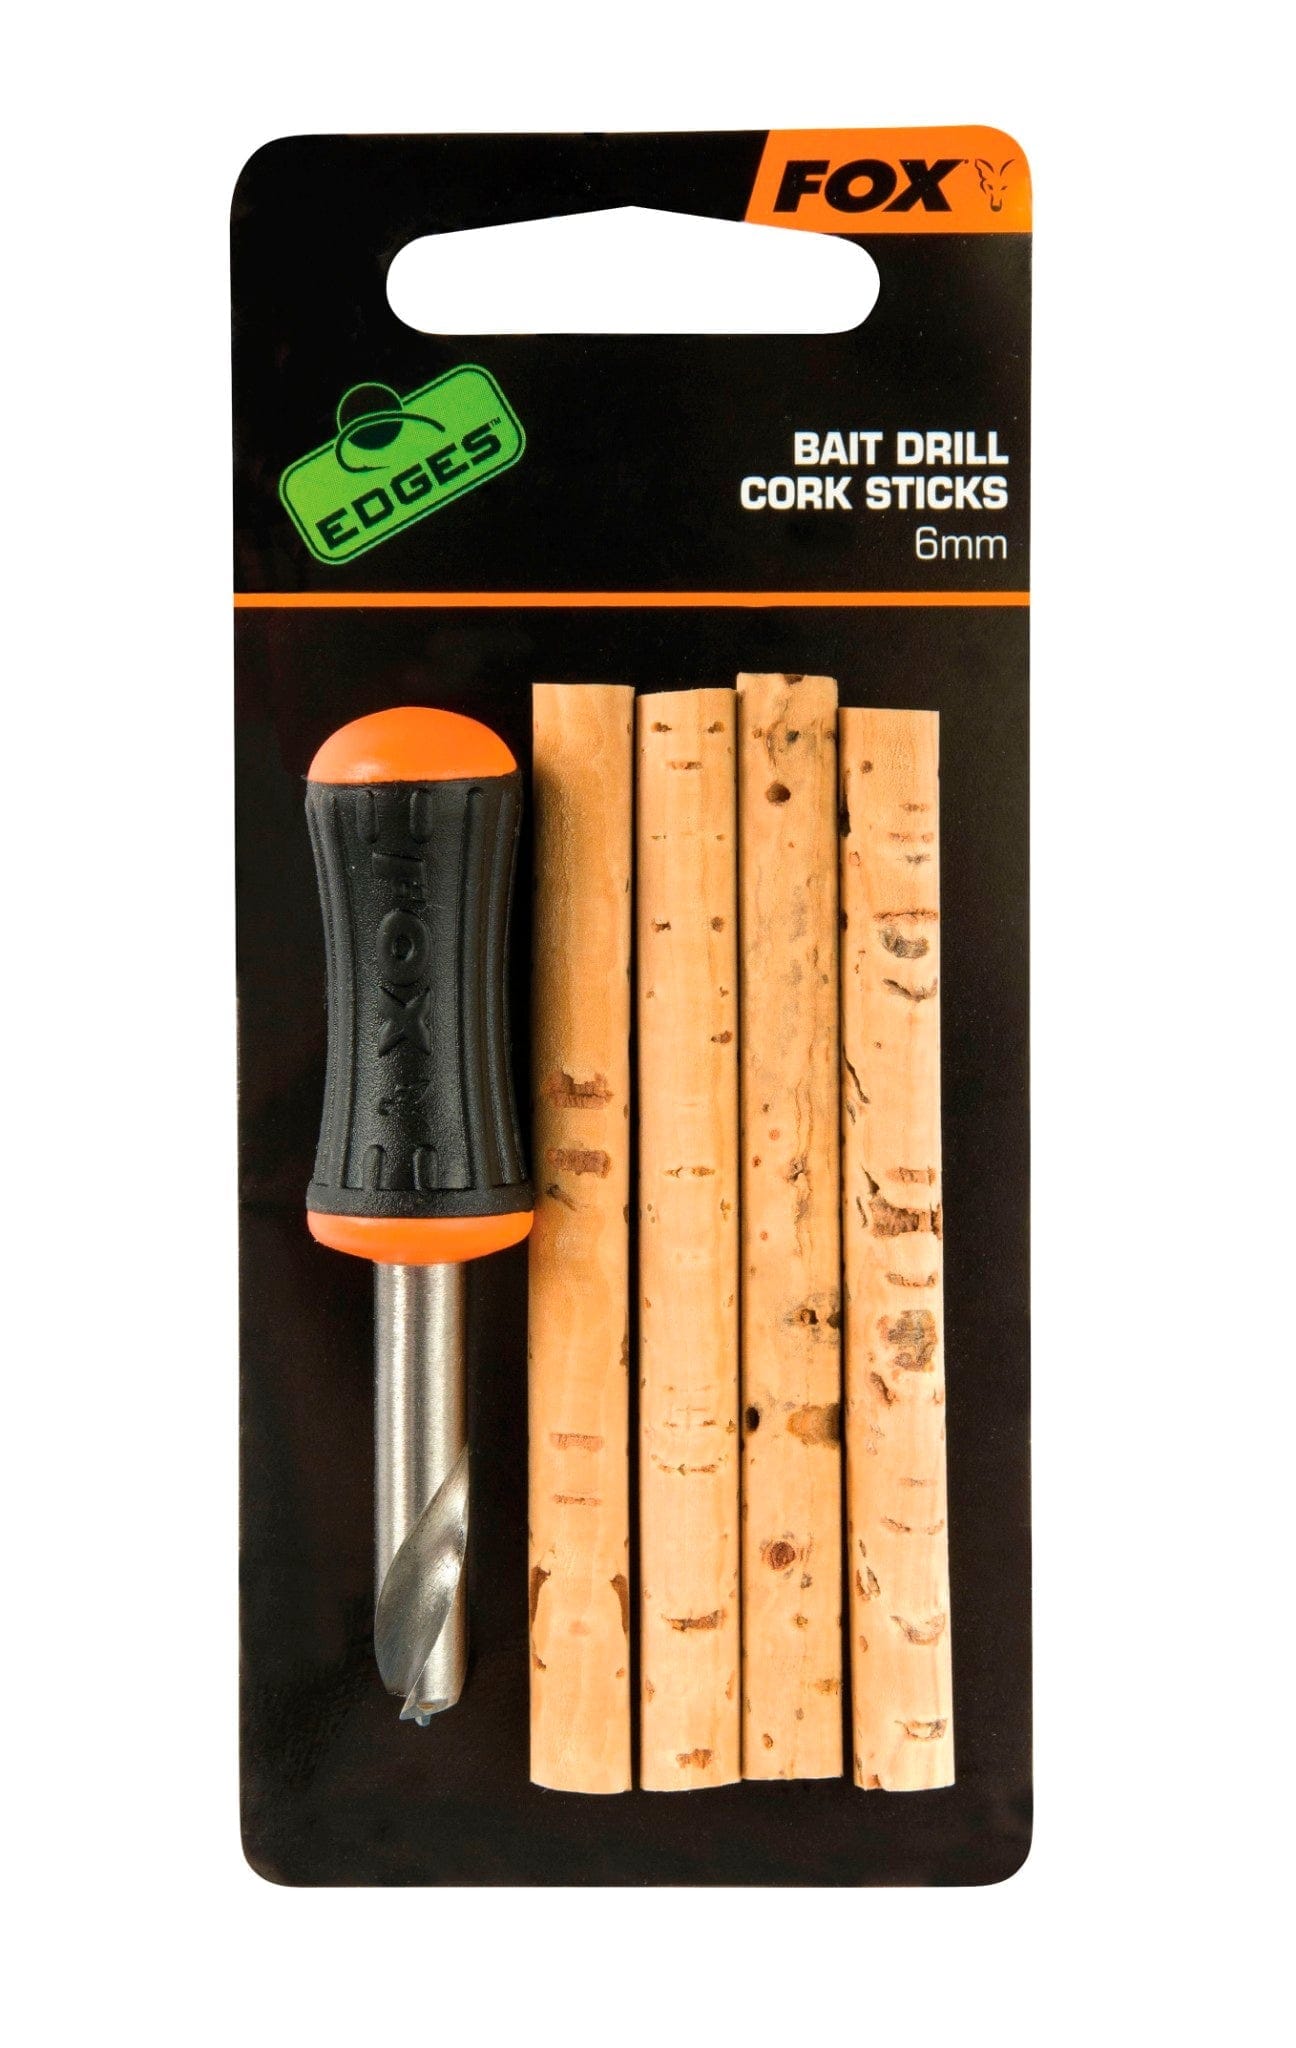 FOX Edges Bait Drill & Cork sticks - 6mm.